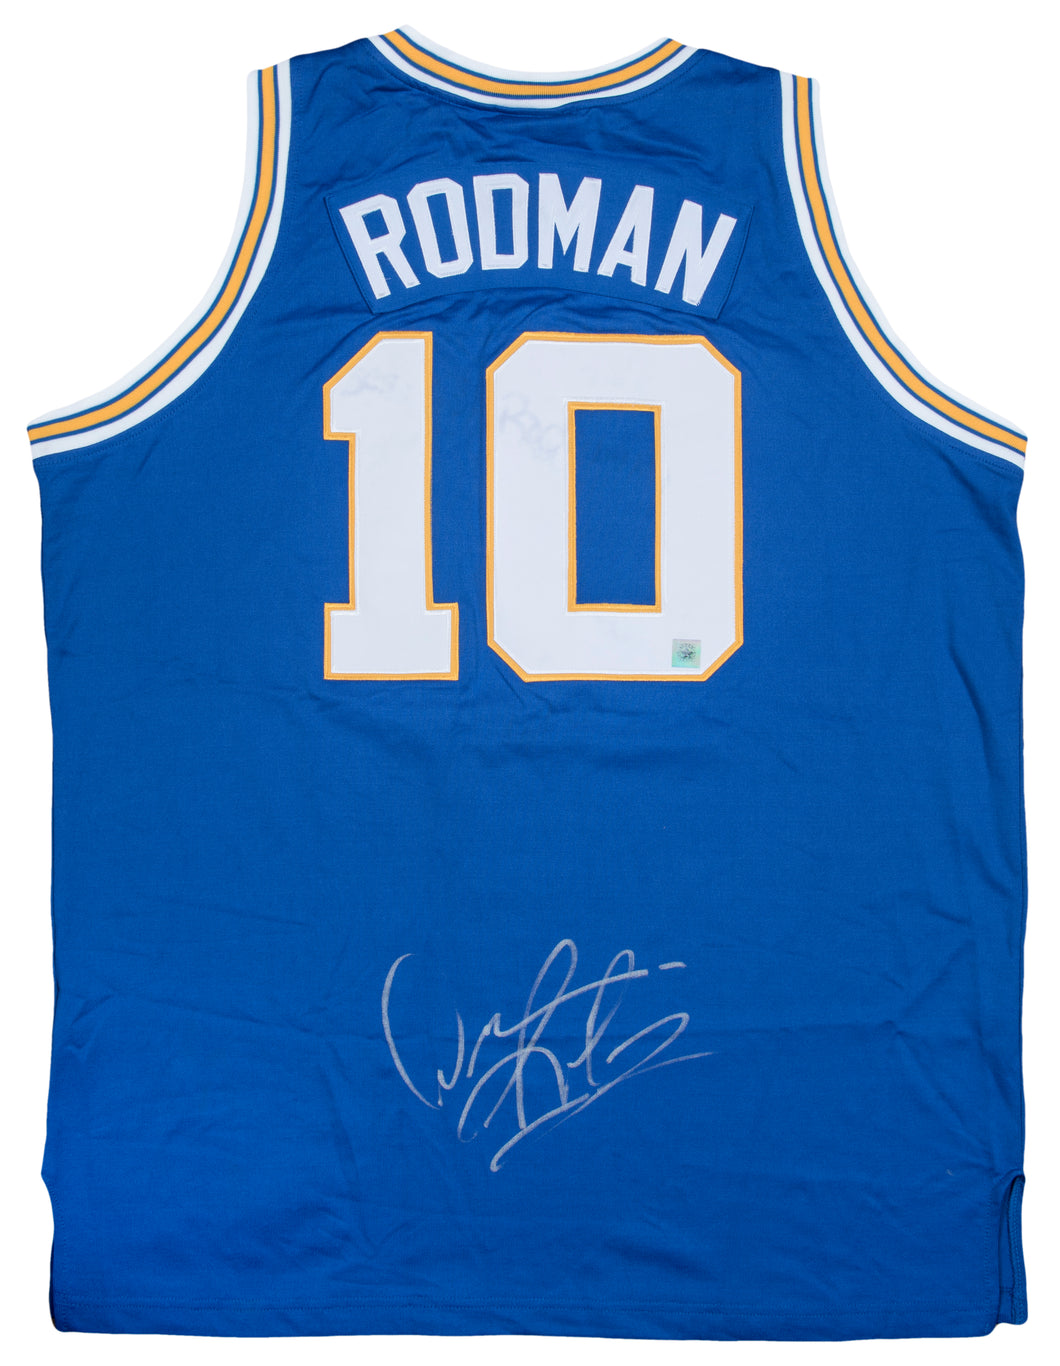 Dennis Rodman Autographed Southeastern Oklahoma State University Jersey